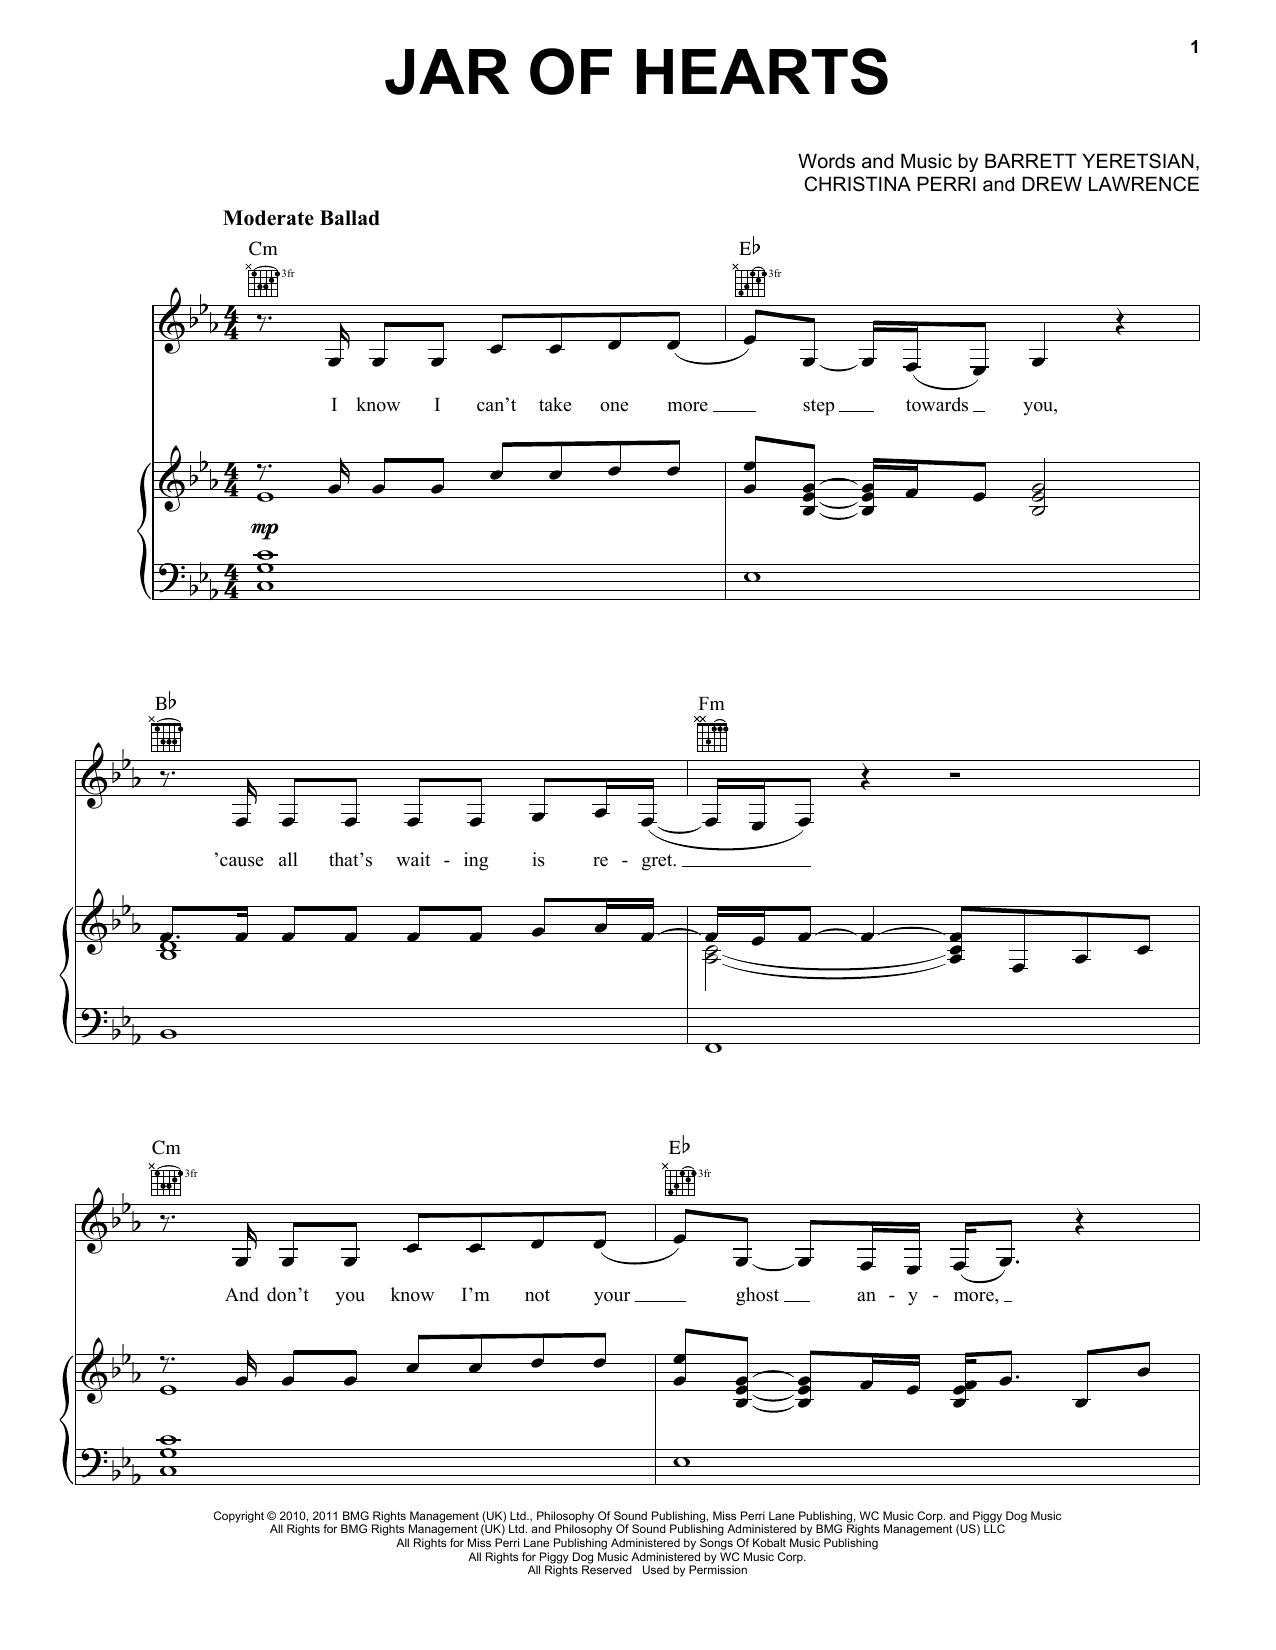 Christina Perri Jar Of Hearts Sheet Music Notes & Chords for Beginner Piano - Download or Print PDF